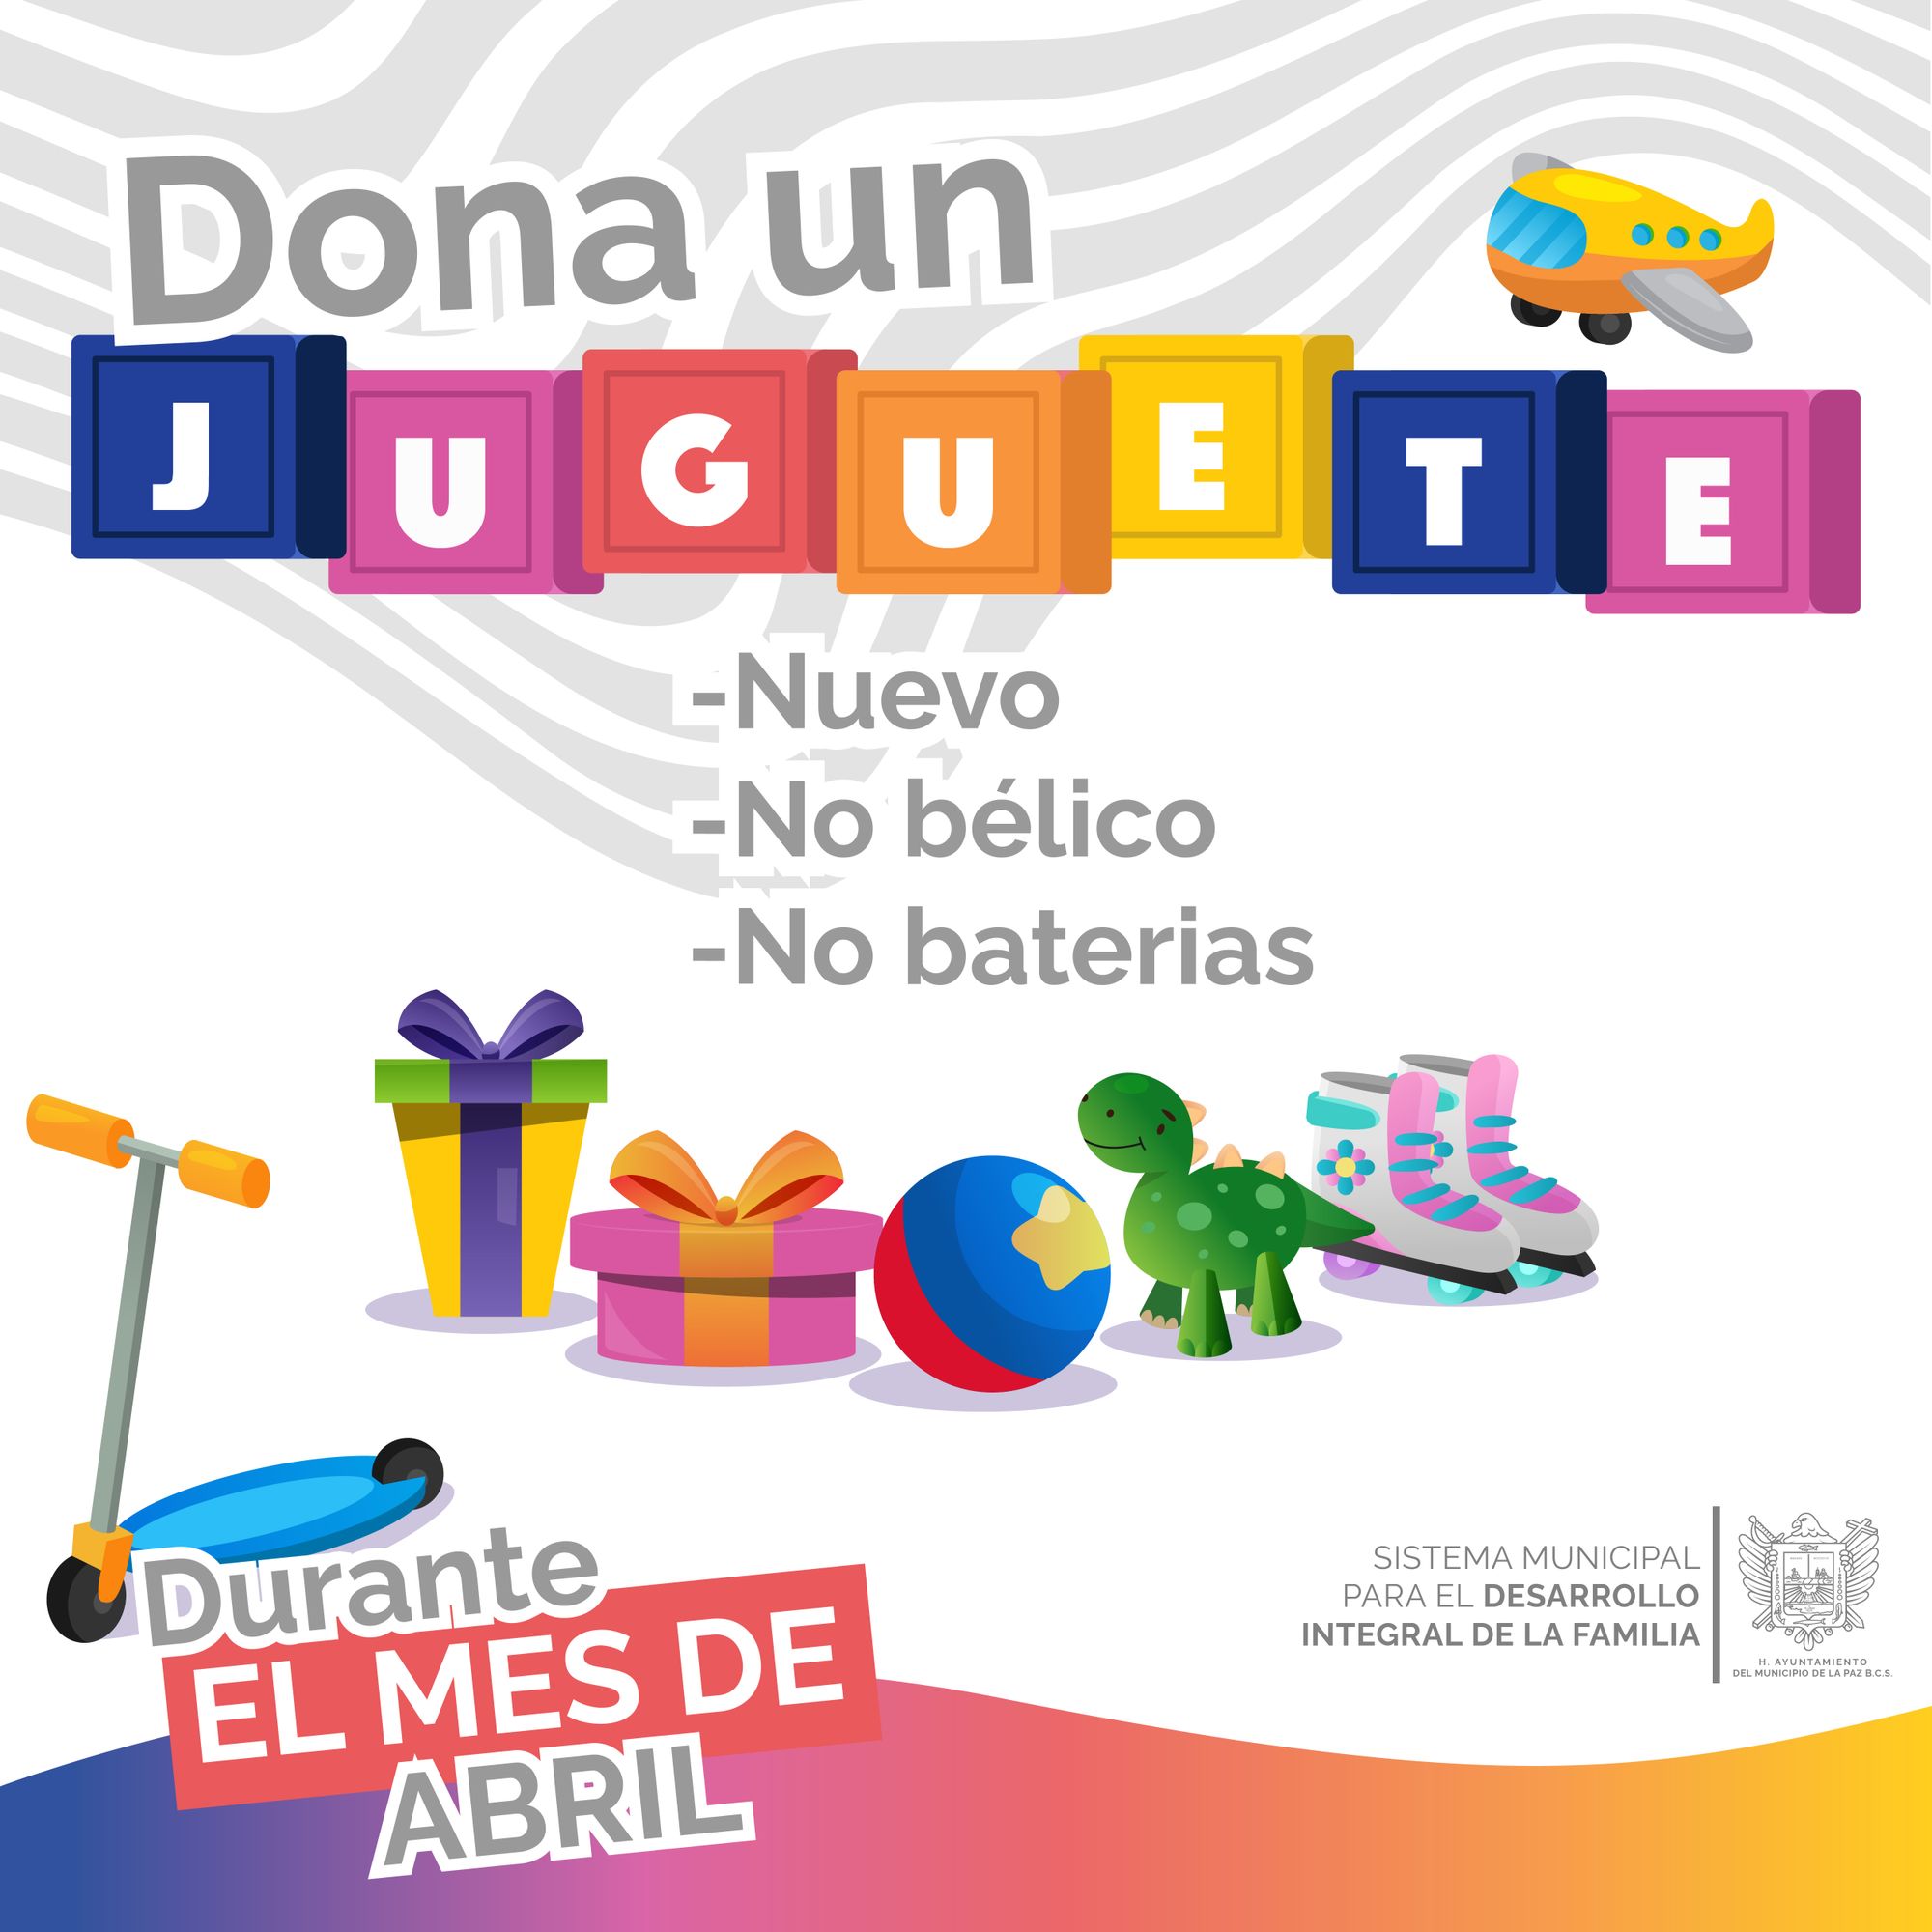 Invita el DIF Municipal a la
campaña “Dona un juguete”